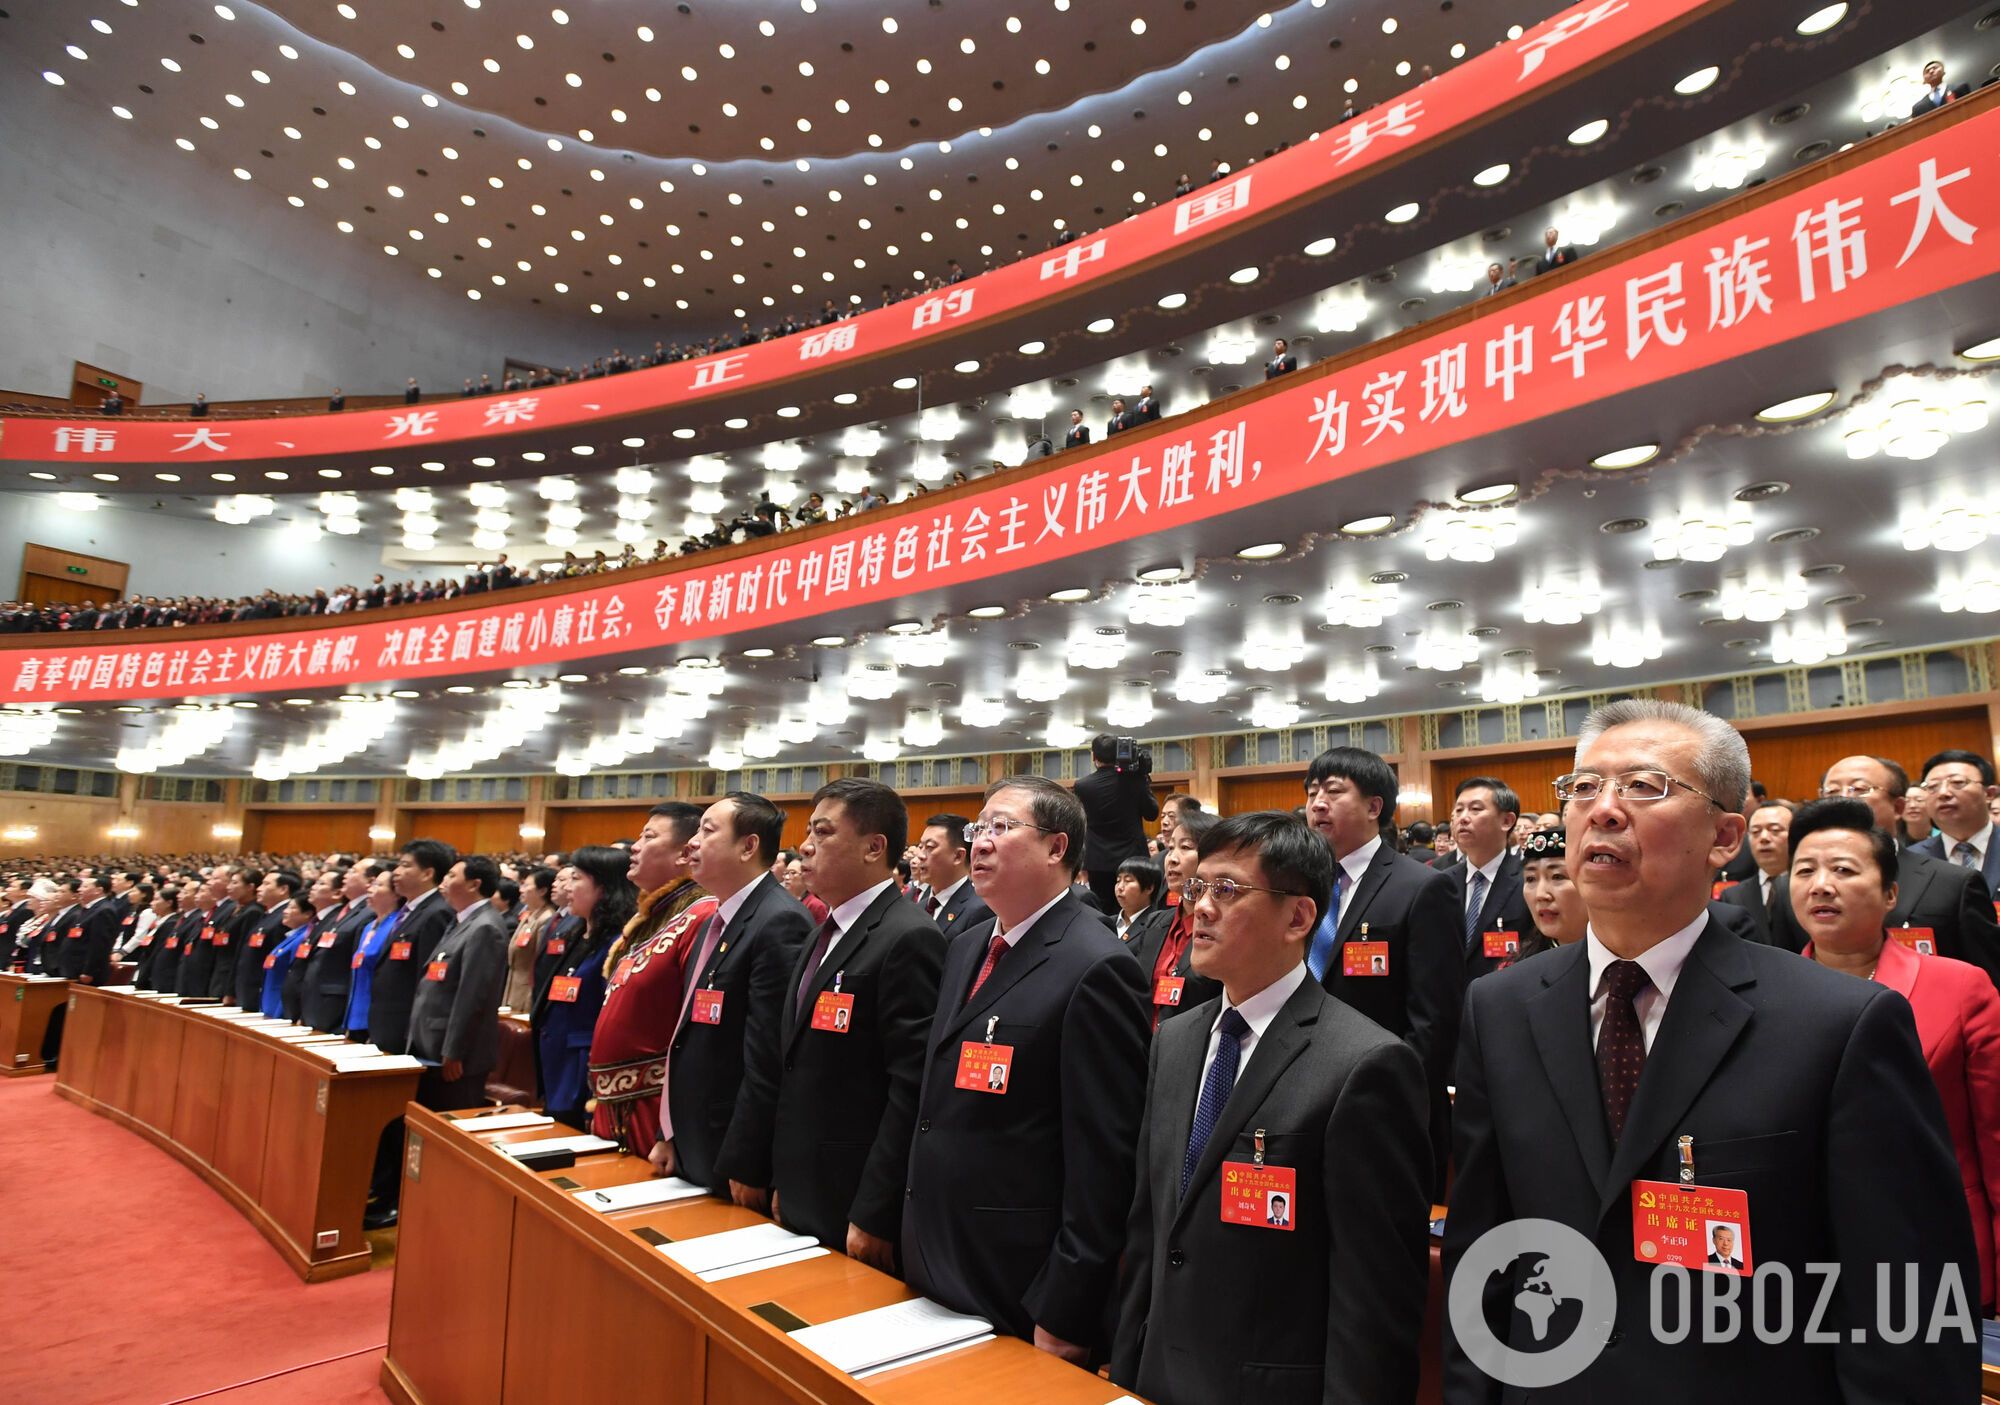 Как проходит съезд Коммунистической партии Китая